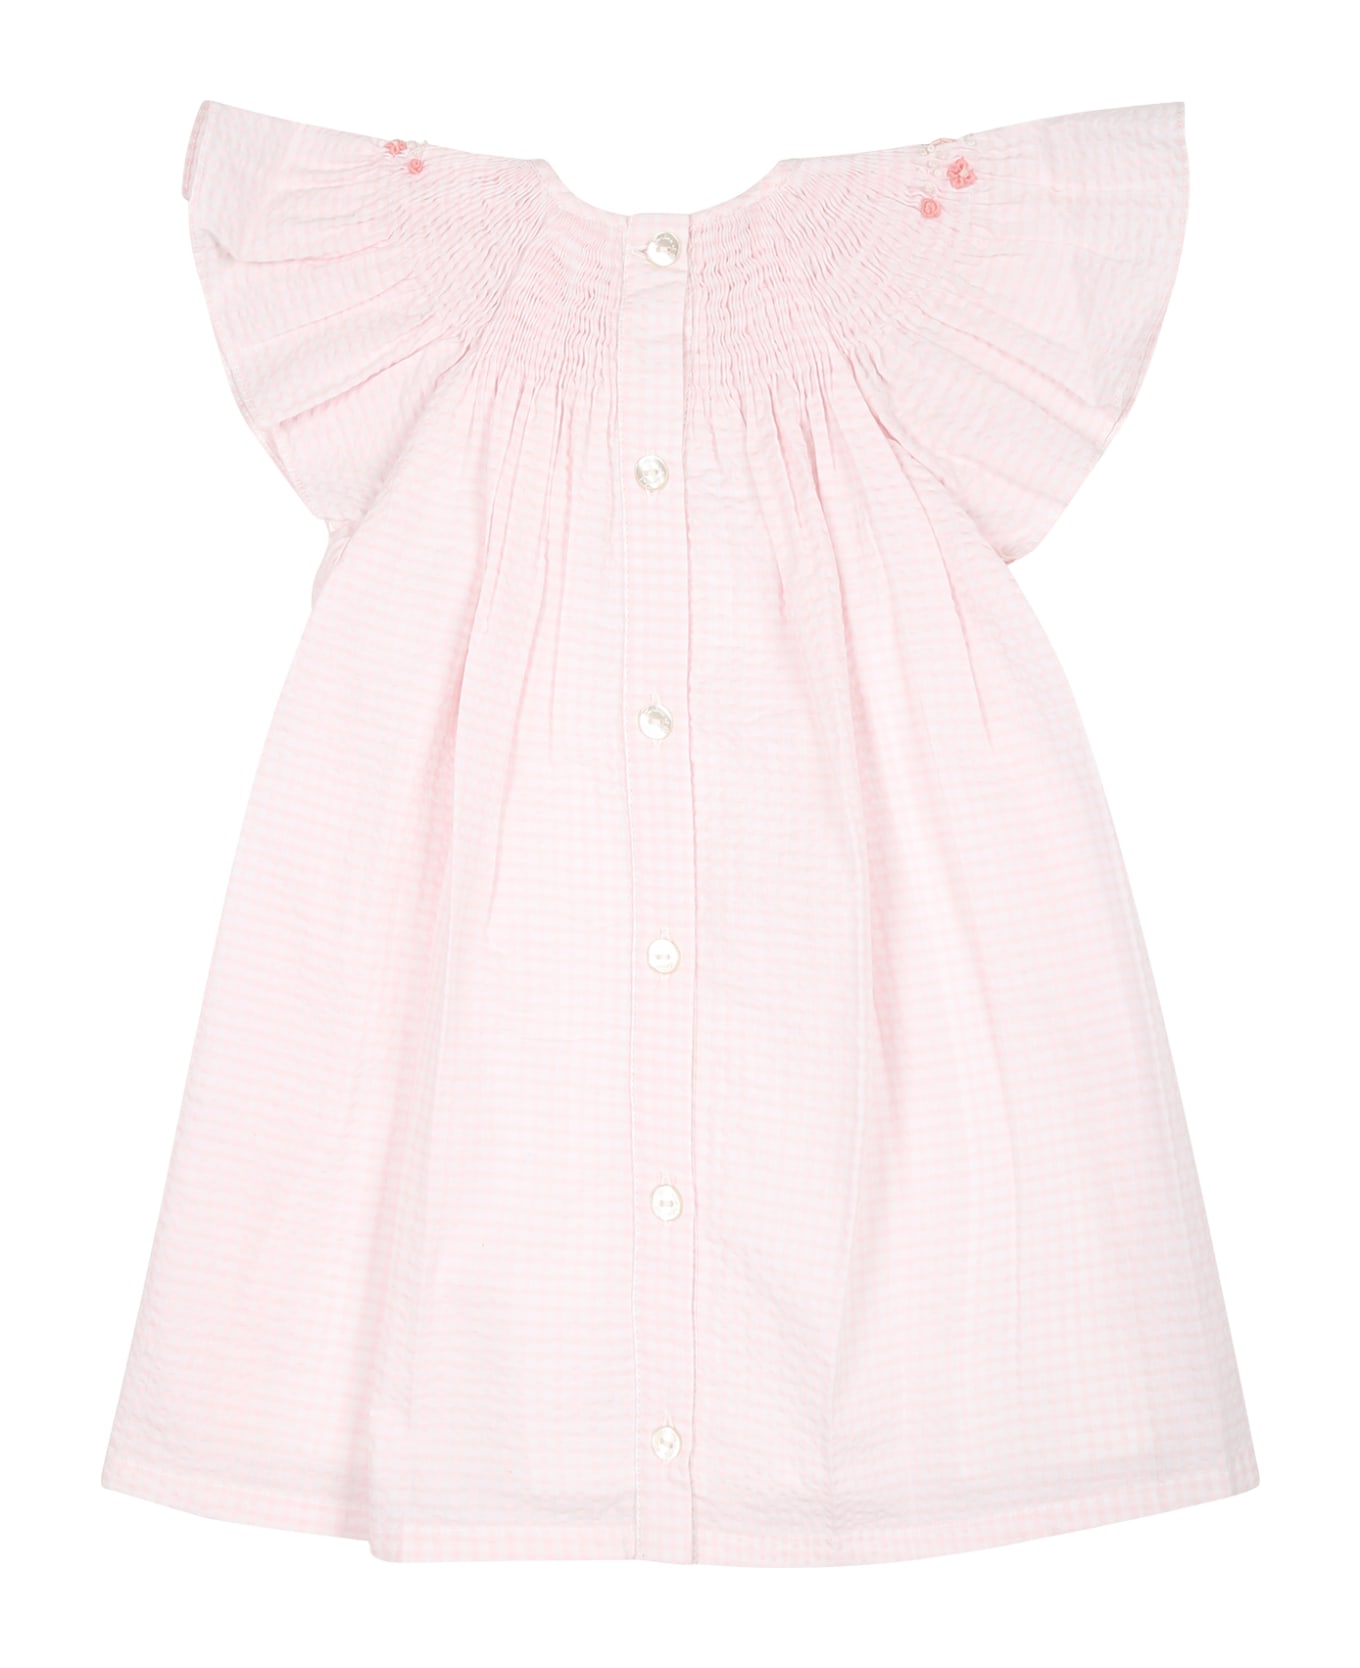 Tartine et Chocolat Pink Casual Dress For Baby Girl - Pink